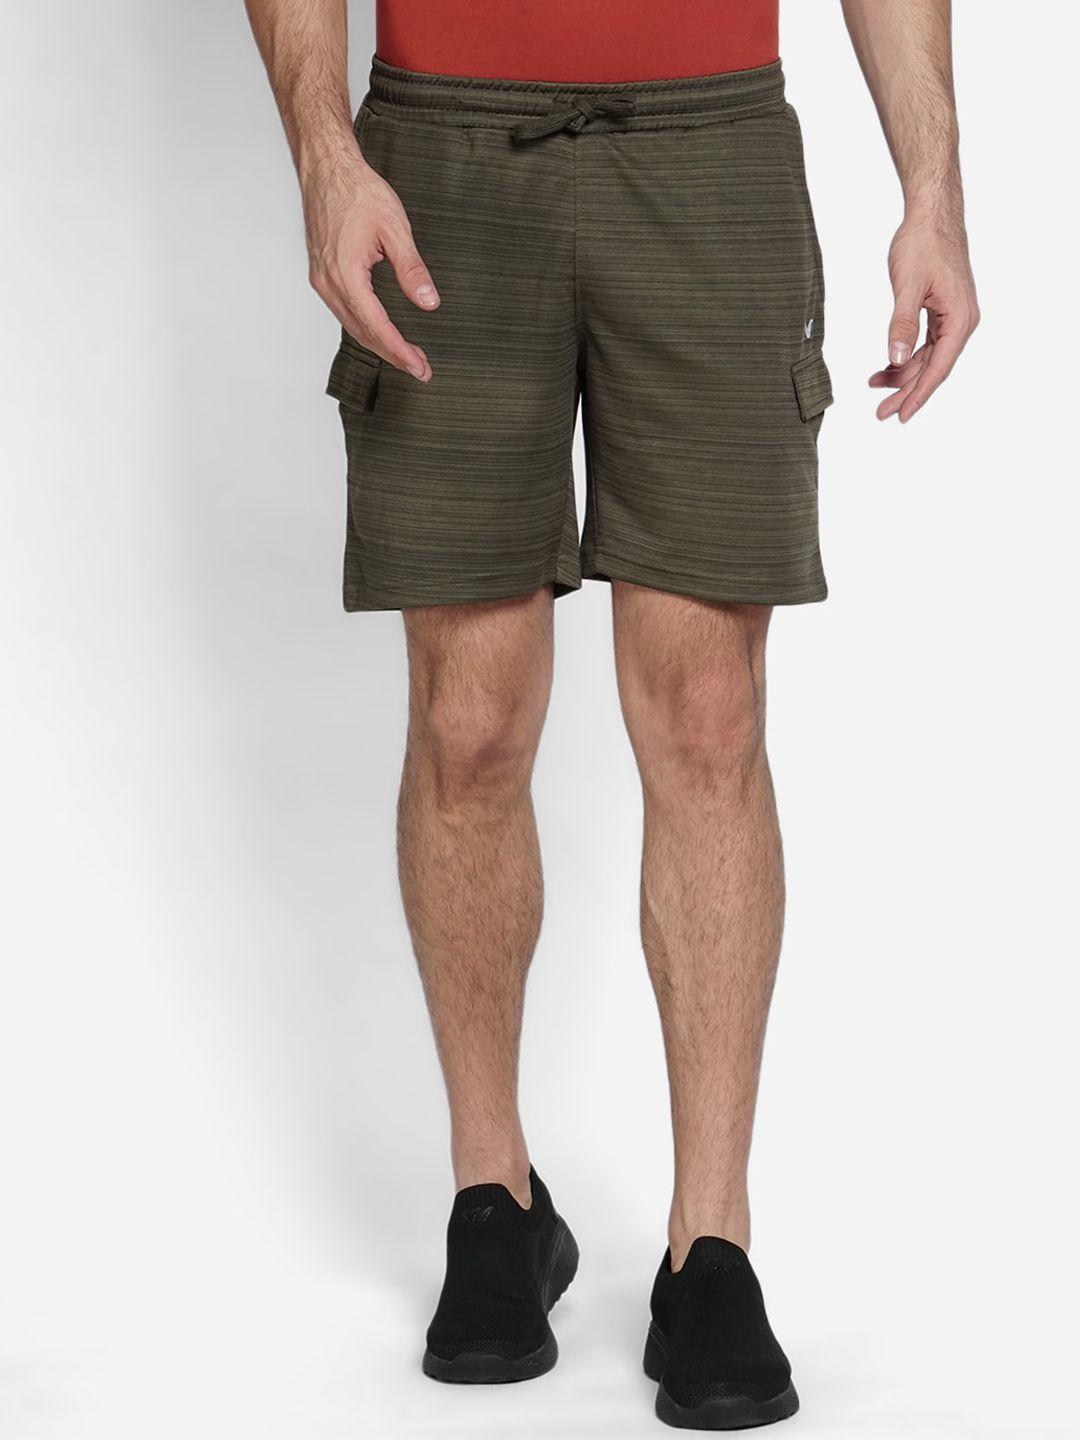 wildcraft-men-olive-green-striped-sports-shorts